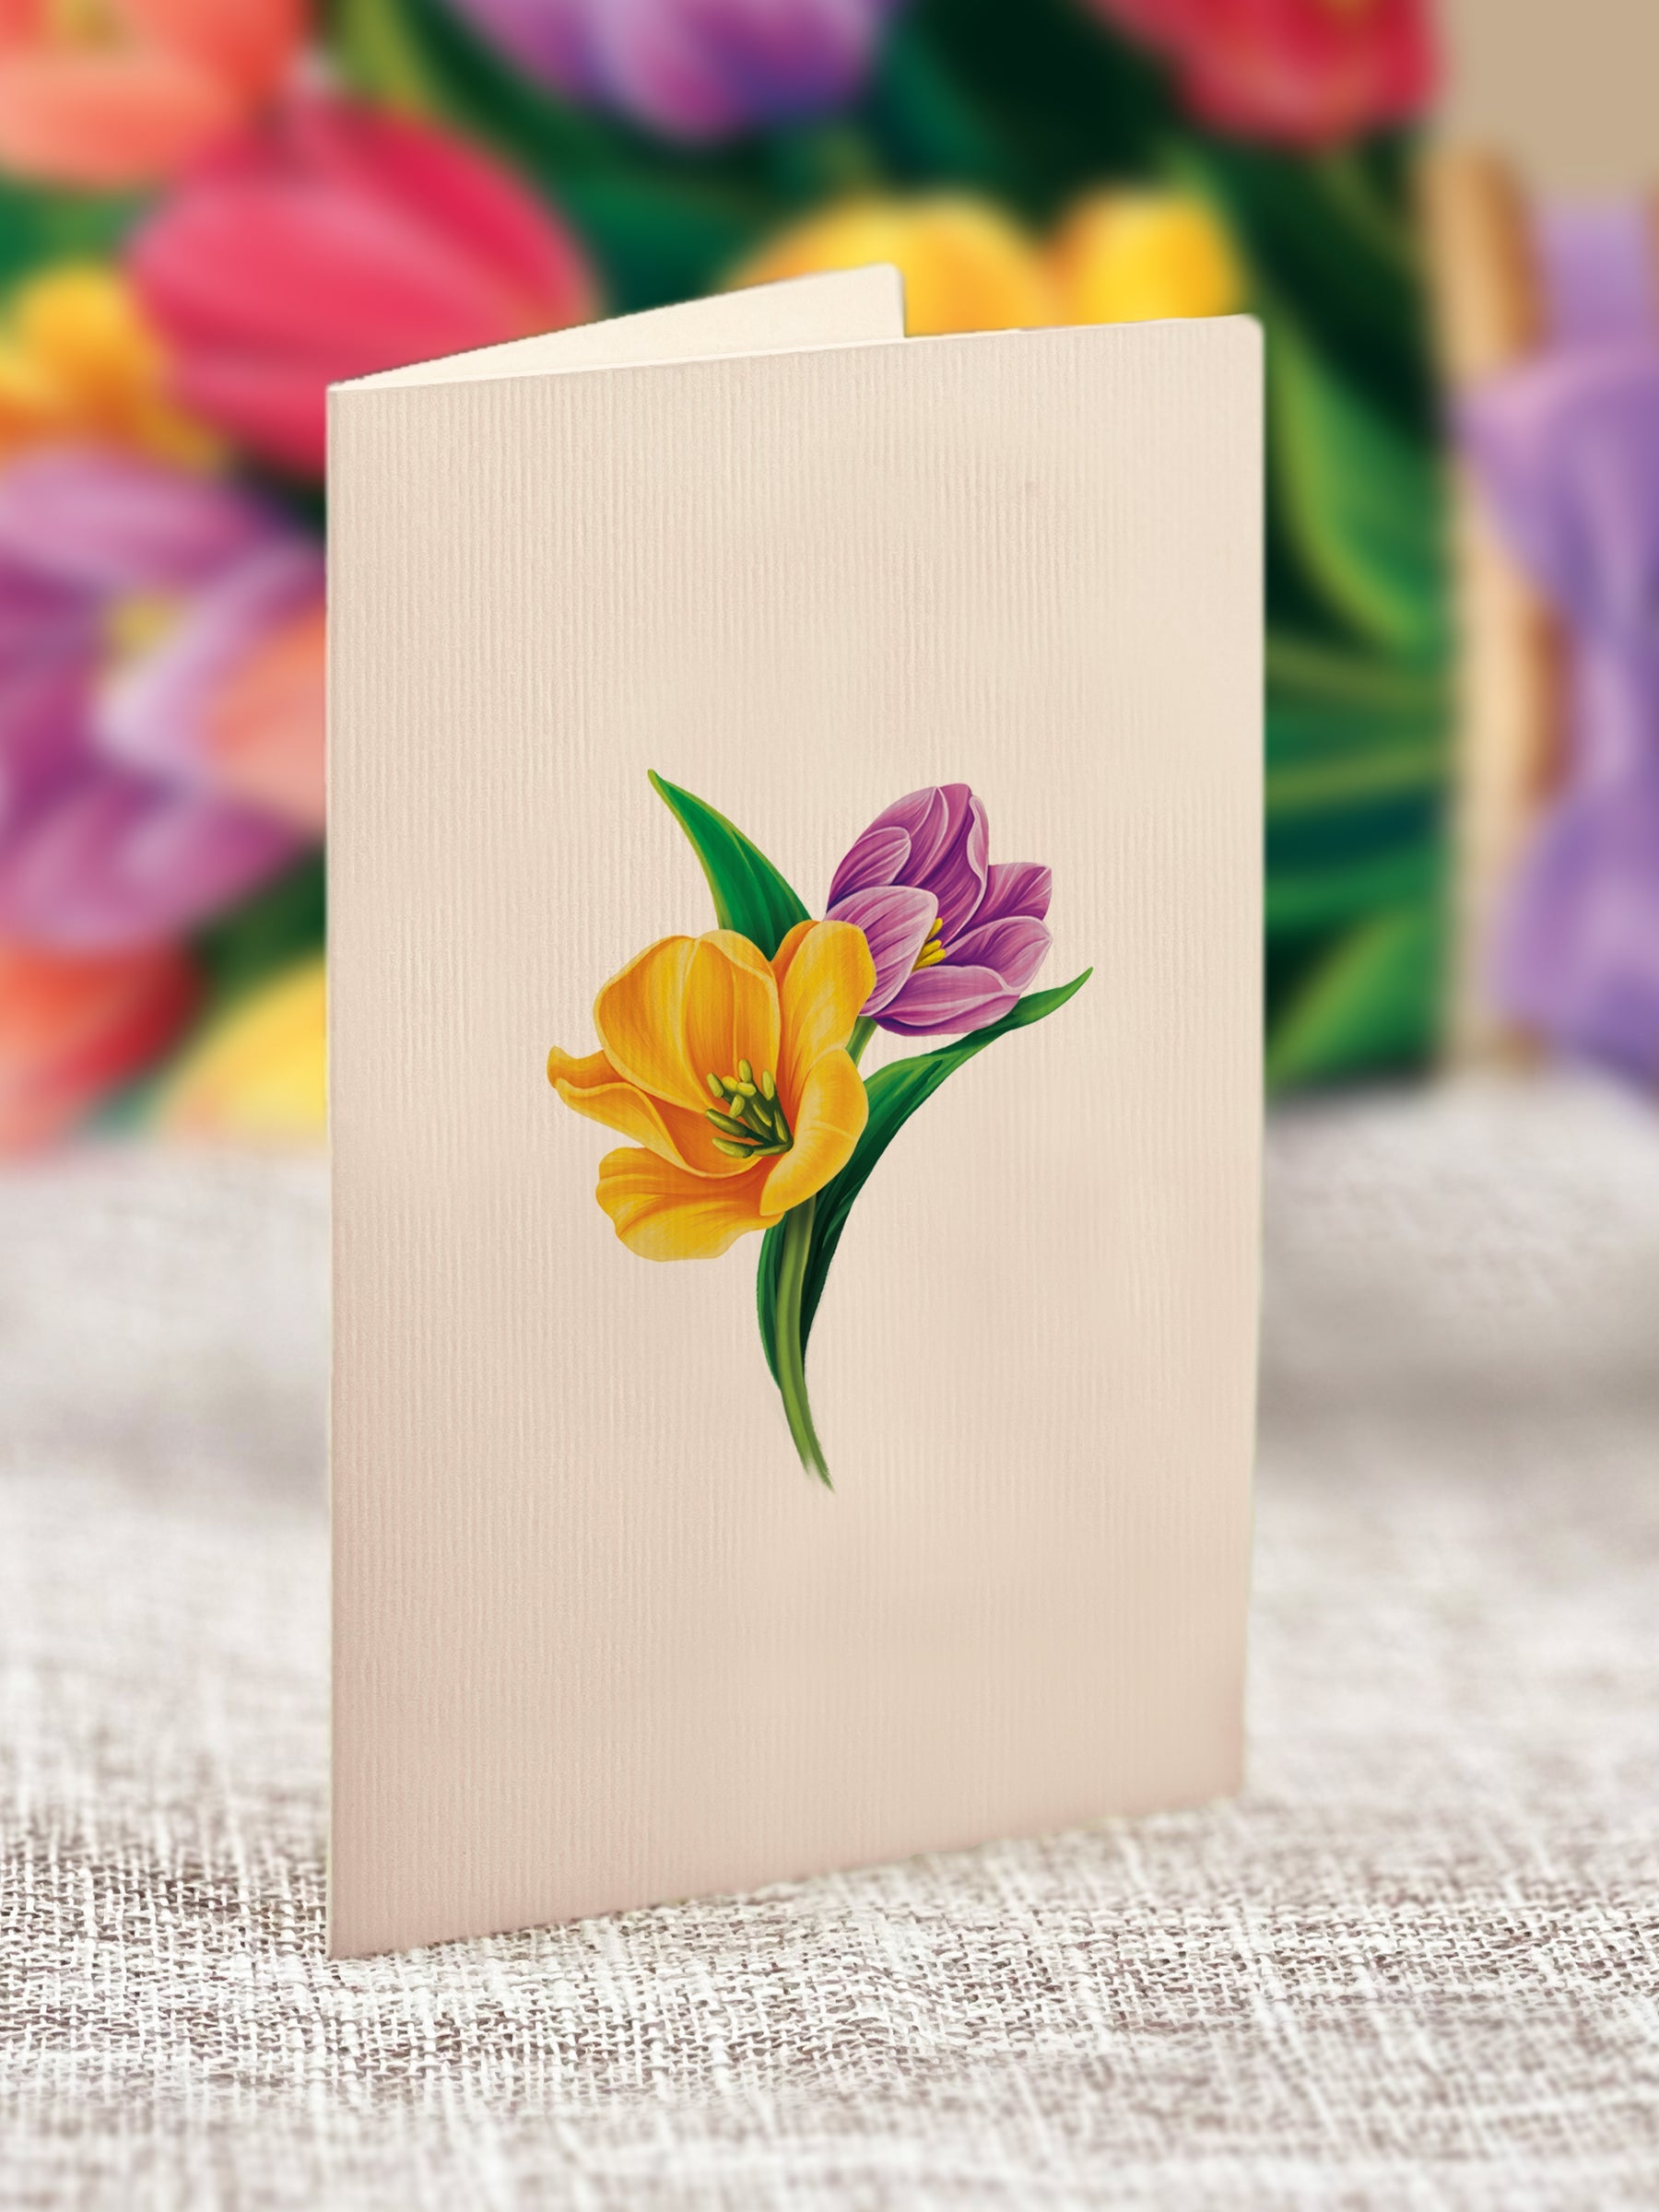 Fresh Cut Paper 3D Pop Up Flower Greeting Note Card – Festive Tulips – 6" x 5"